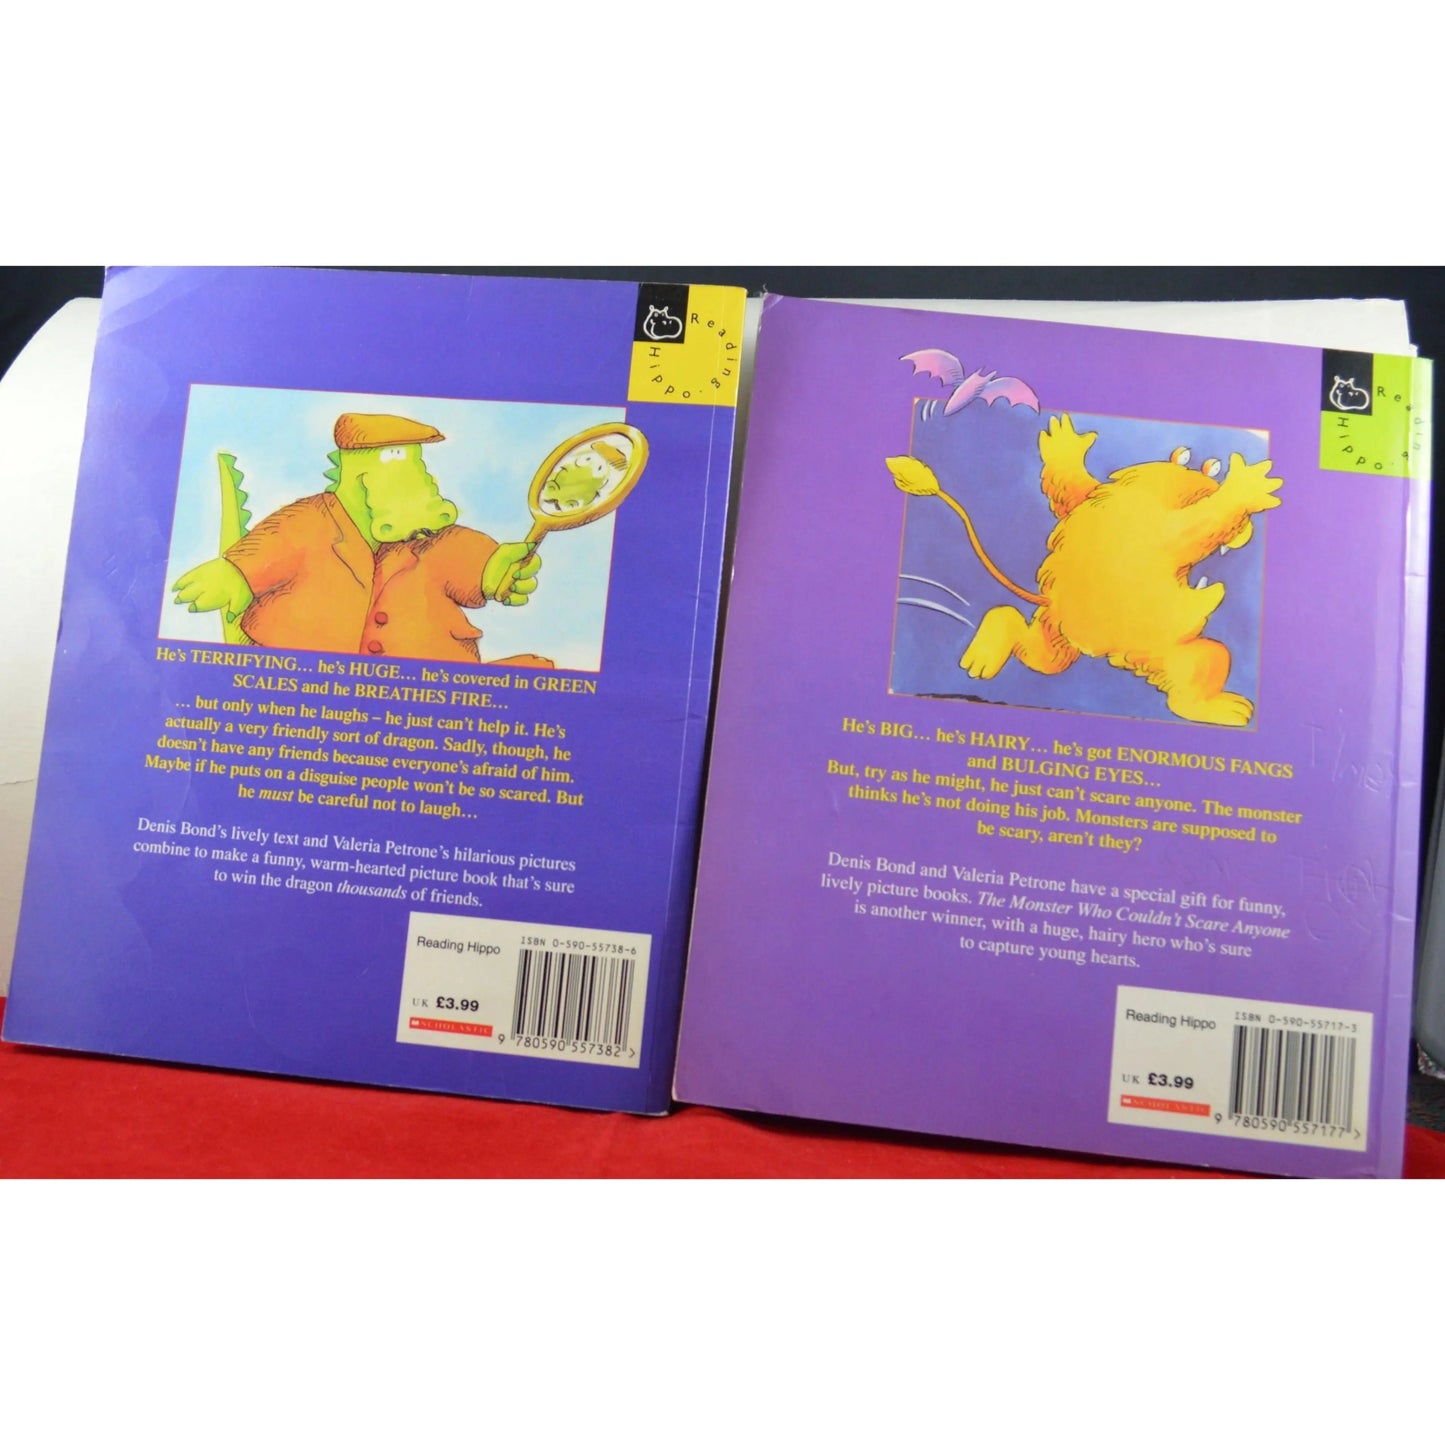 2 CHILDRENS’S BOOKS BY DENIS BOND | CHILDRENS’S BOOKS - TMD167207